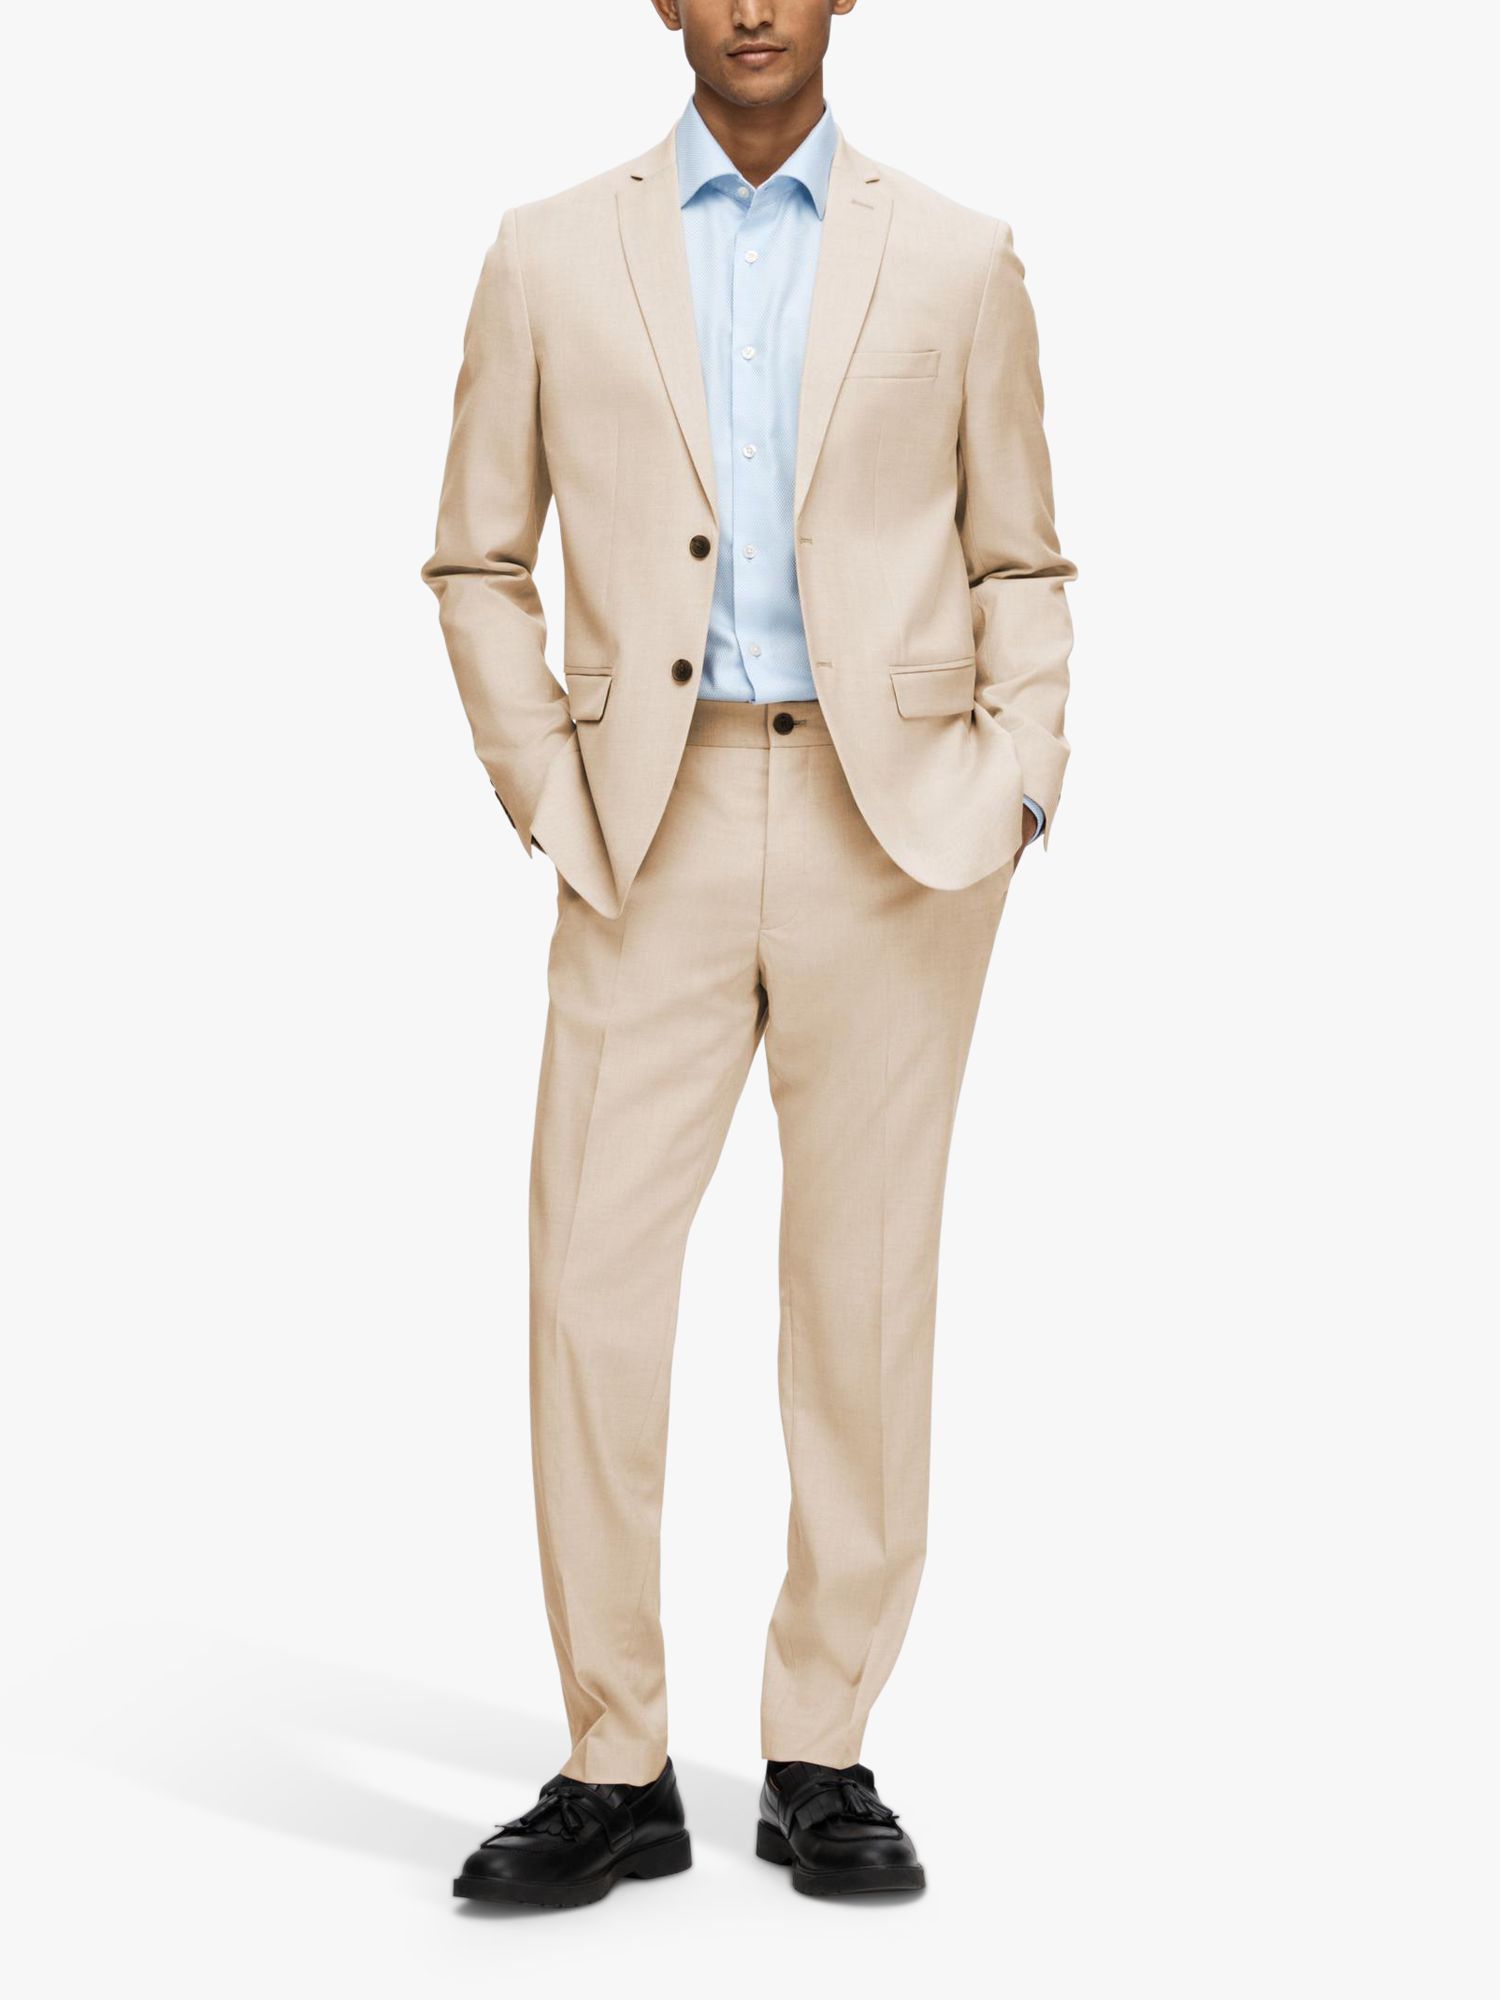 SELECTED HOMME Cedric Slim Fit Suit Jacket, Sand, 38R